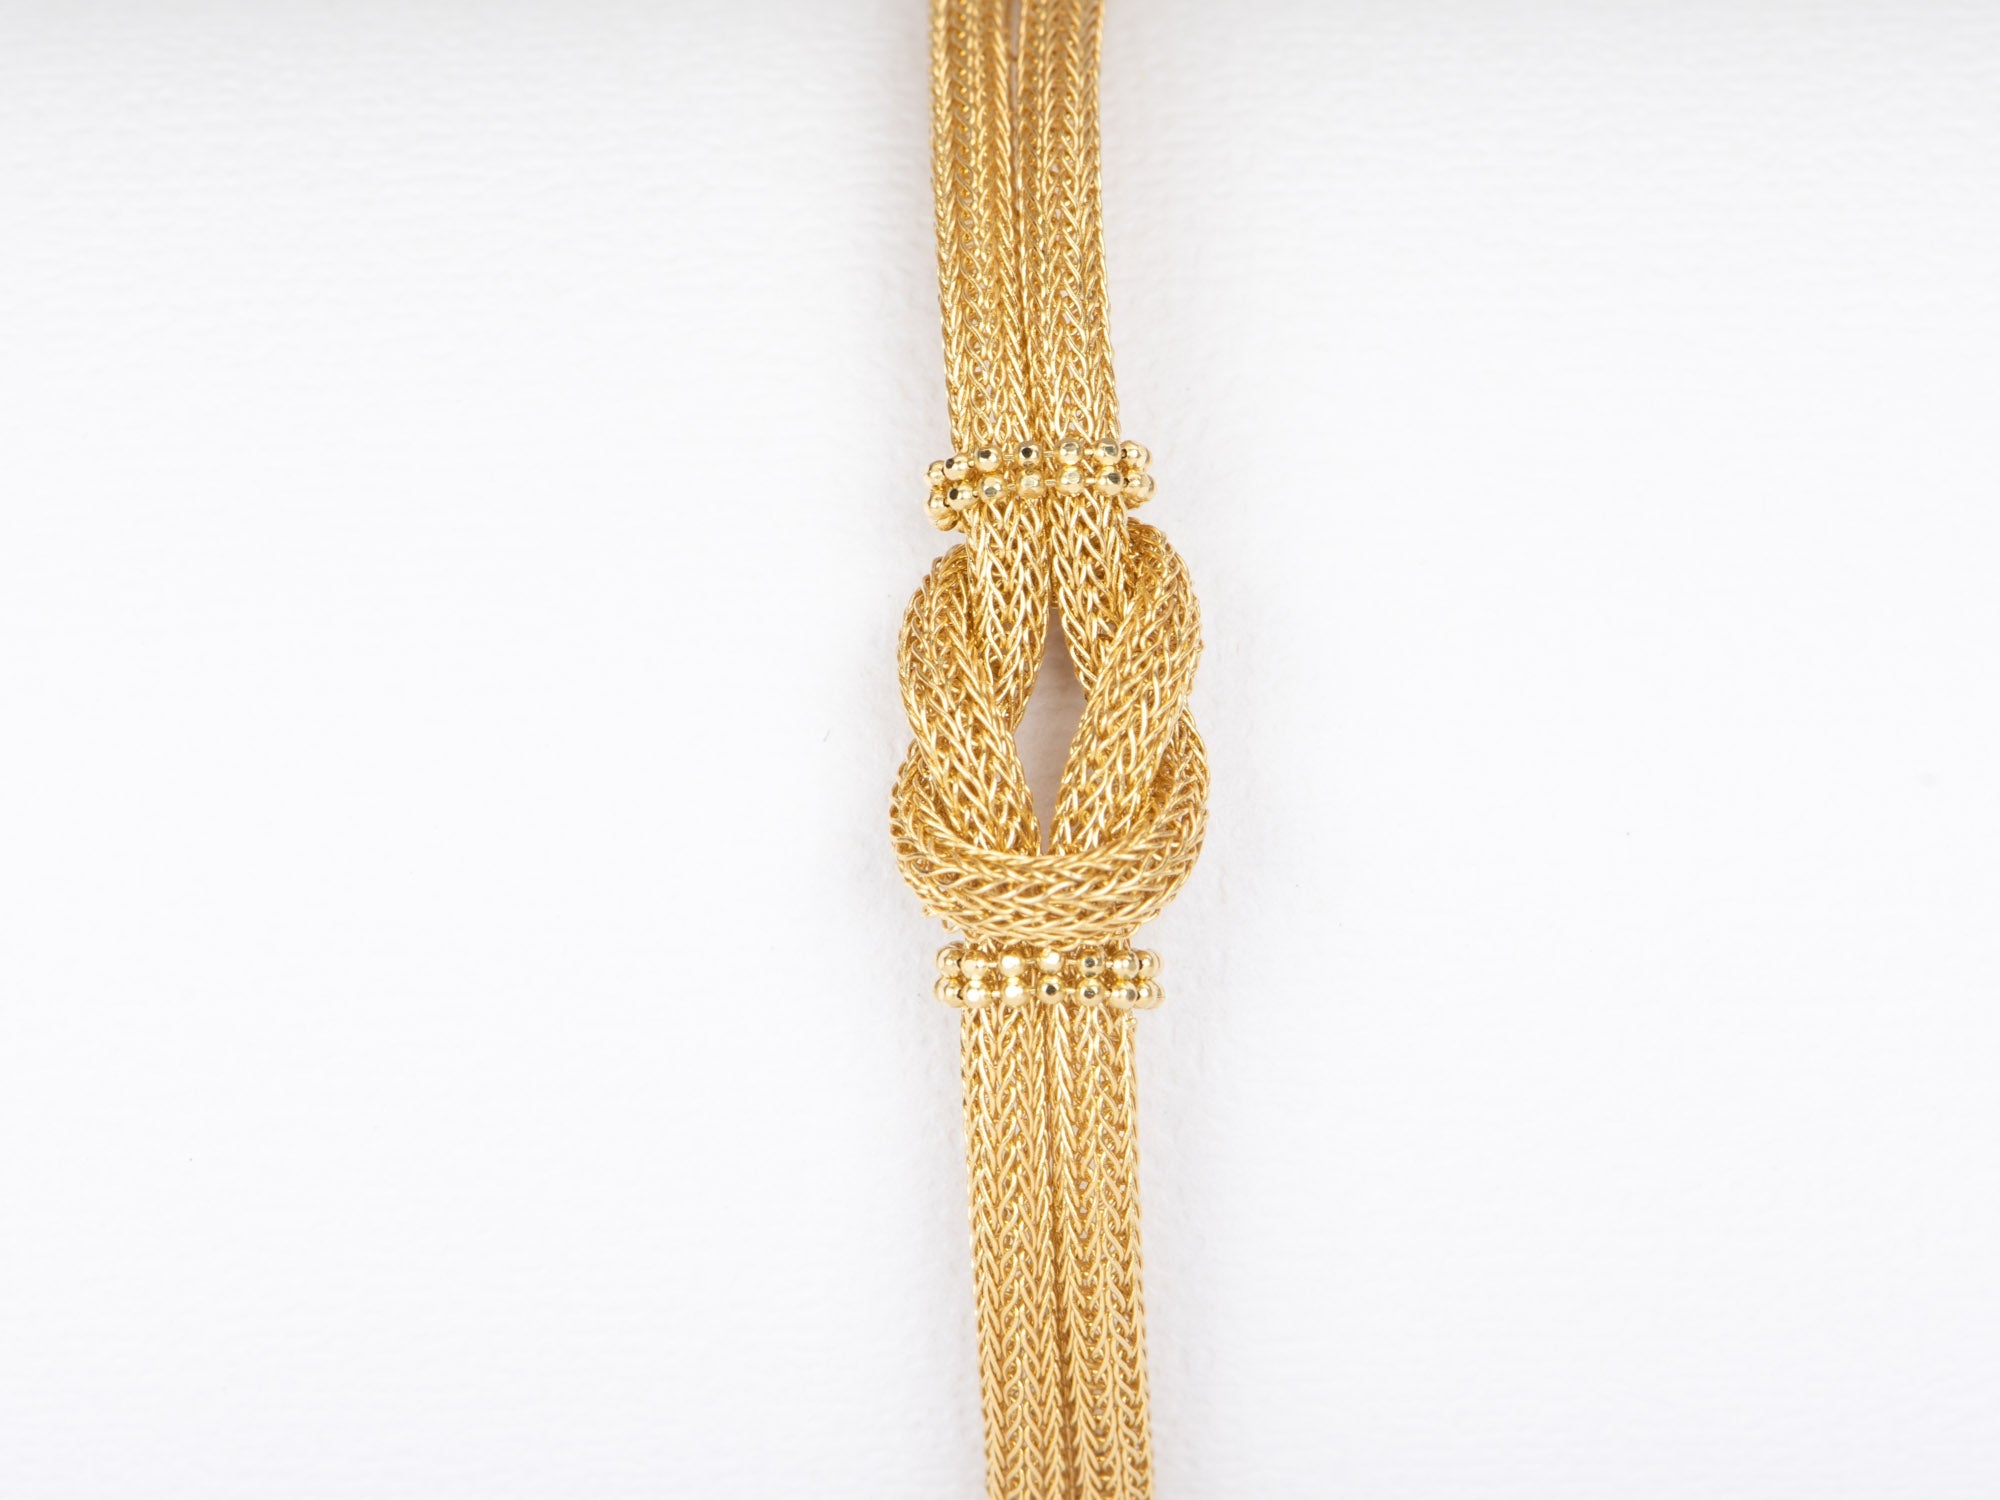 18kgold 𝐂artier Cord Bracelets• Price: 200$ each